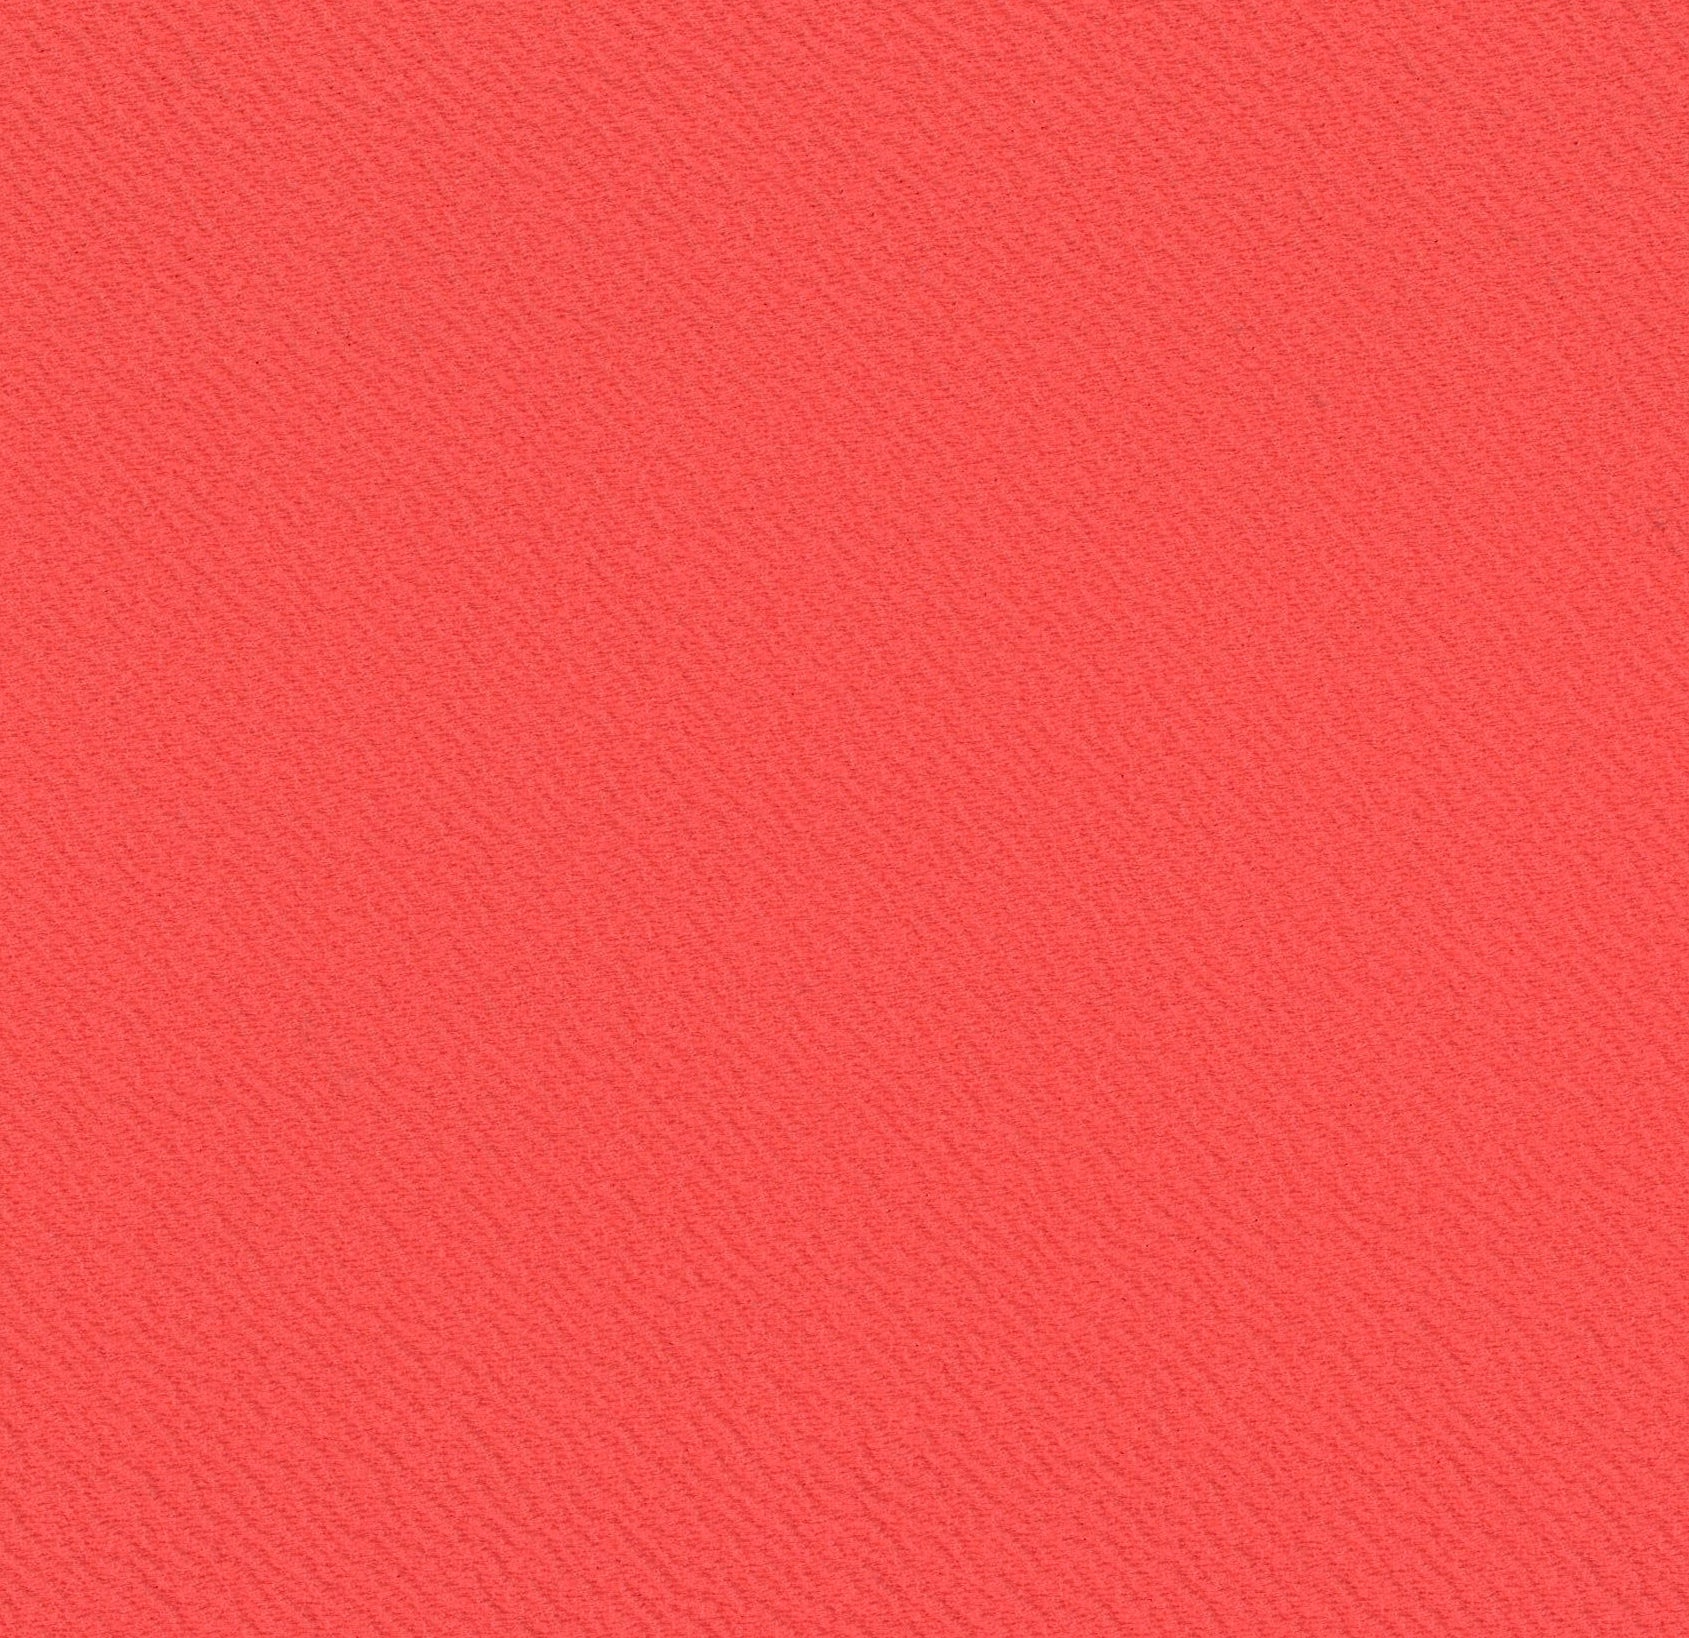 13018-09 Hot Coral Riverpool Jacquard Plain Dyed Blend 260g/yd 58&quot; blend jacquard knit orange plain dyed polyester spandex Solid Color, Jacquard - knit fabric - woven fabric - fabric company - fabric wholesale - fabric b2b - fabric factory - high quality fabric - hong kong fabric - fabric hk - acetate fabric - cotton fabric - linen fabric - metallic fabric - nylon fabric - polyester fabric - spandex fabric - chun wing hing - cwh hk - fabric worldwide ship - 針織布 - 梳織布 - 布料公司- 布料批發 - 香港布料 - 秦榮興